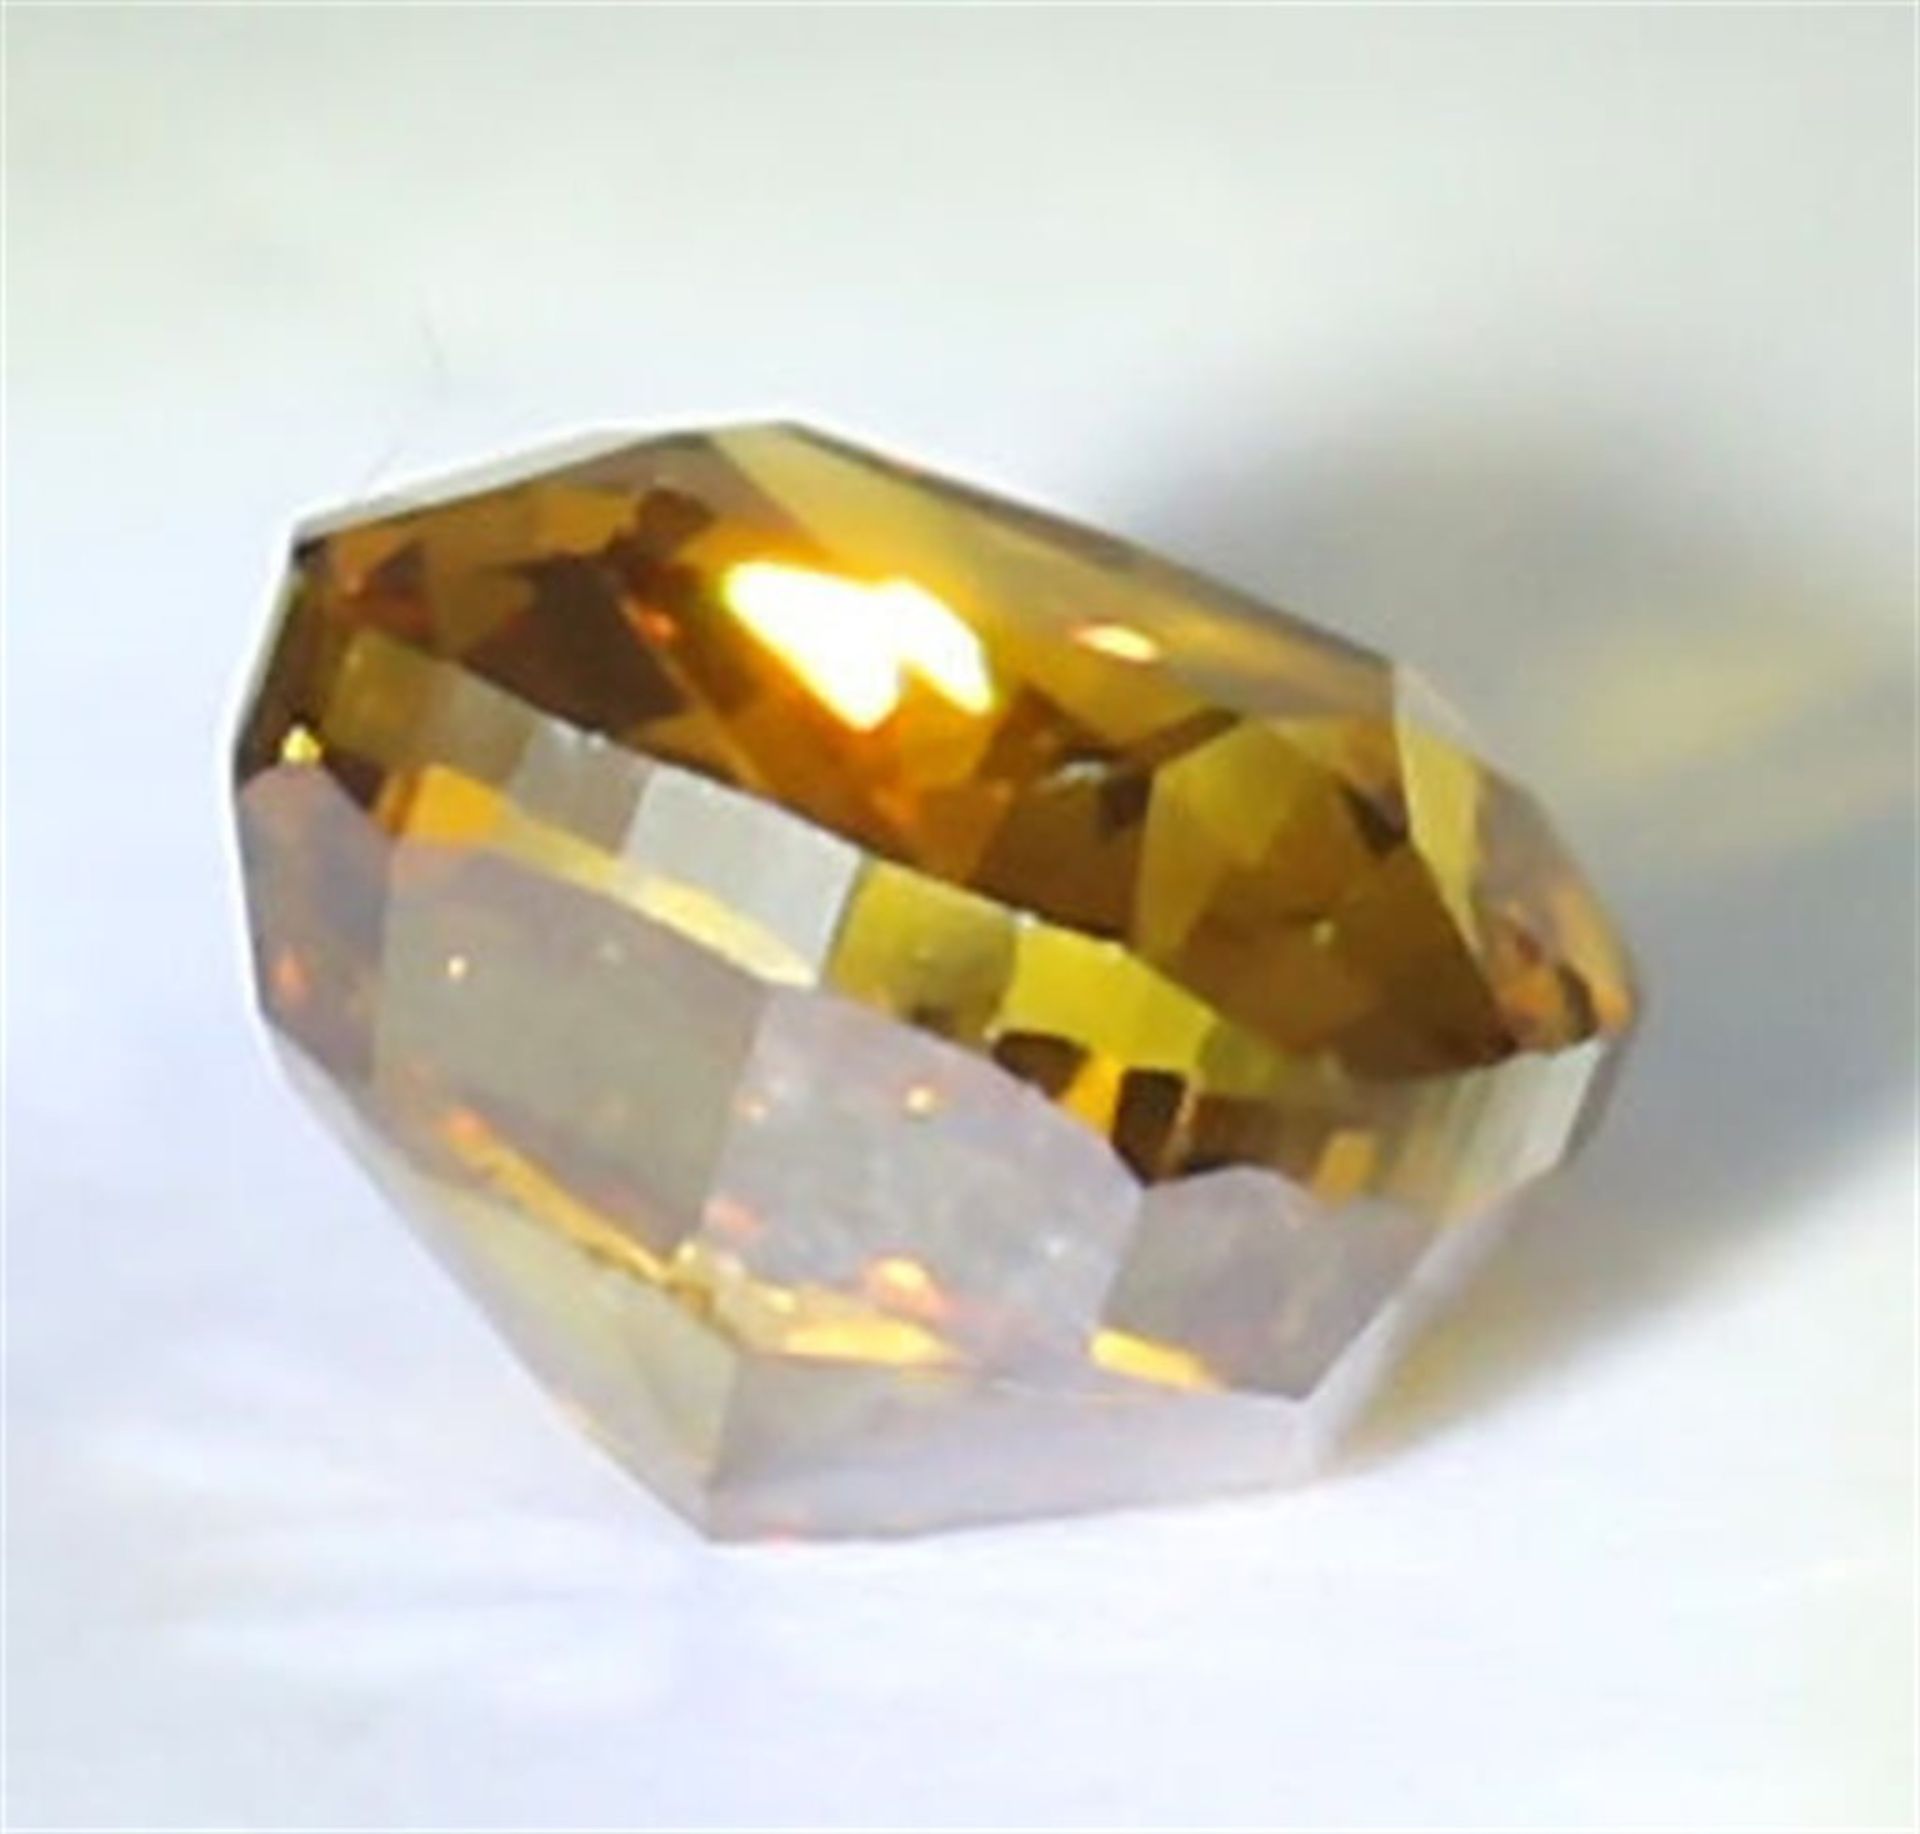 IGI Certified 0.66 ct. Diamond - Fancy Brownish Yellow - VS 2 UNTREATED - Image 5 of 6